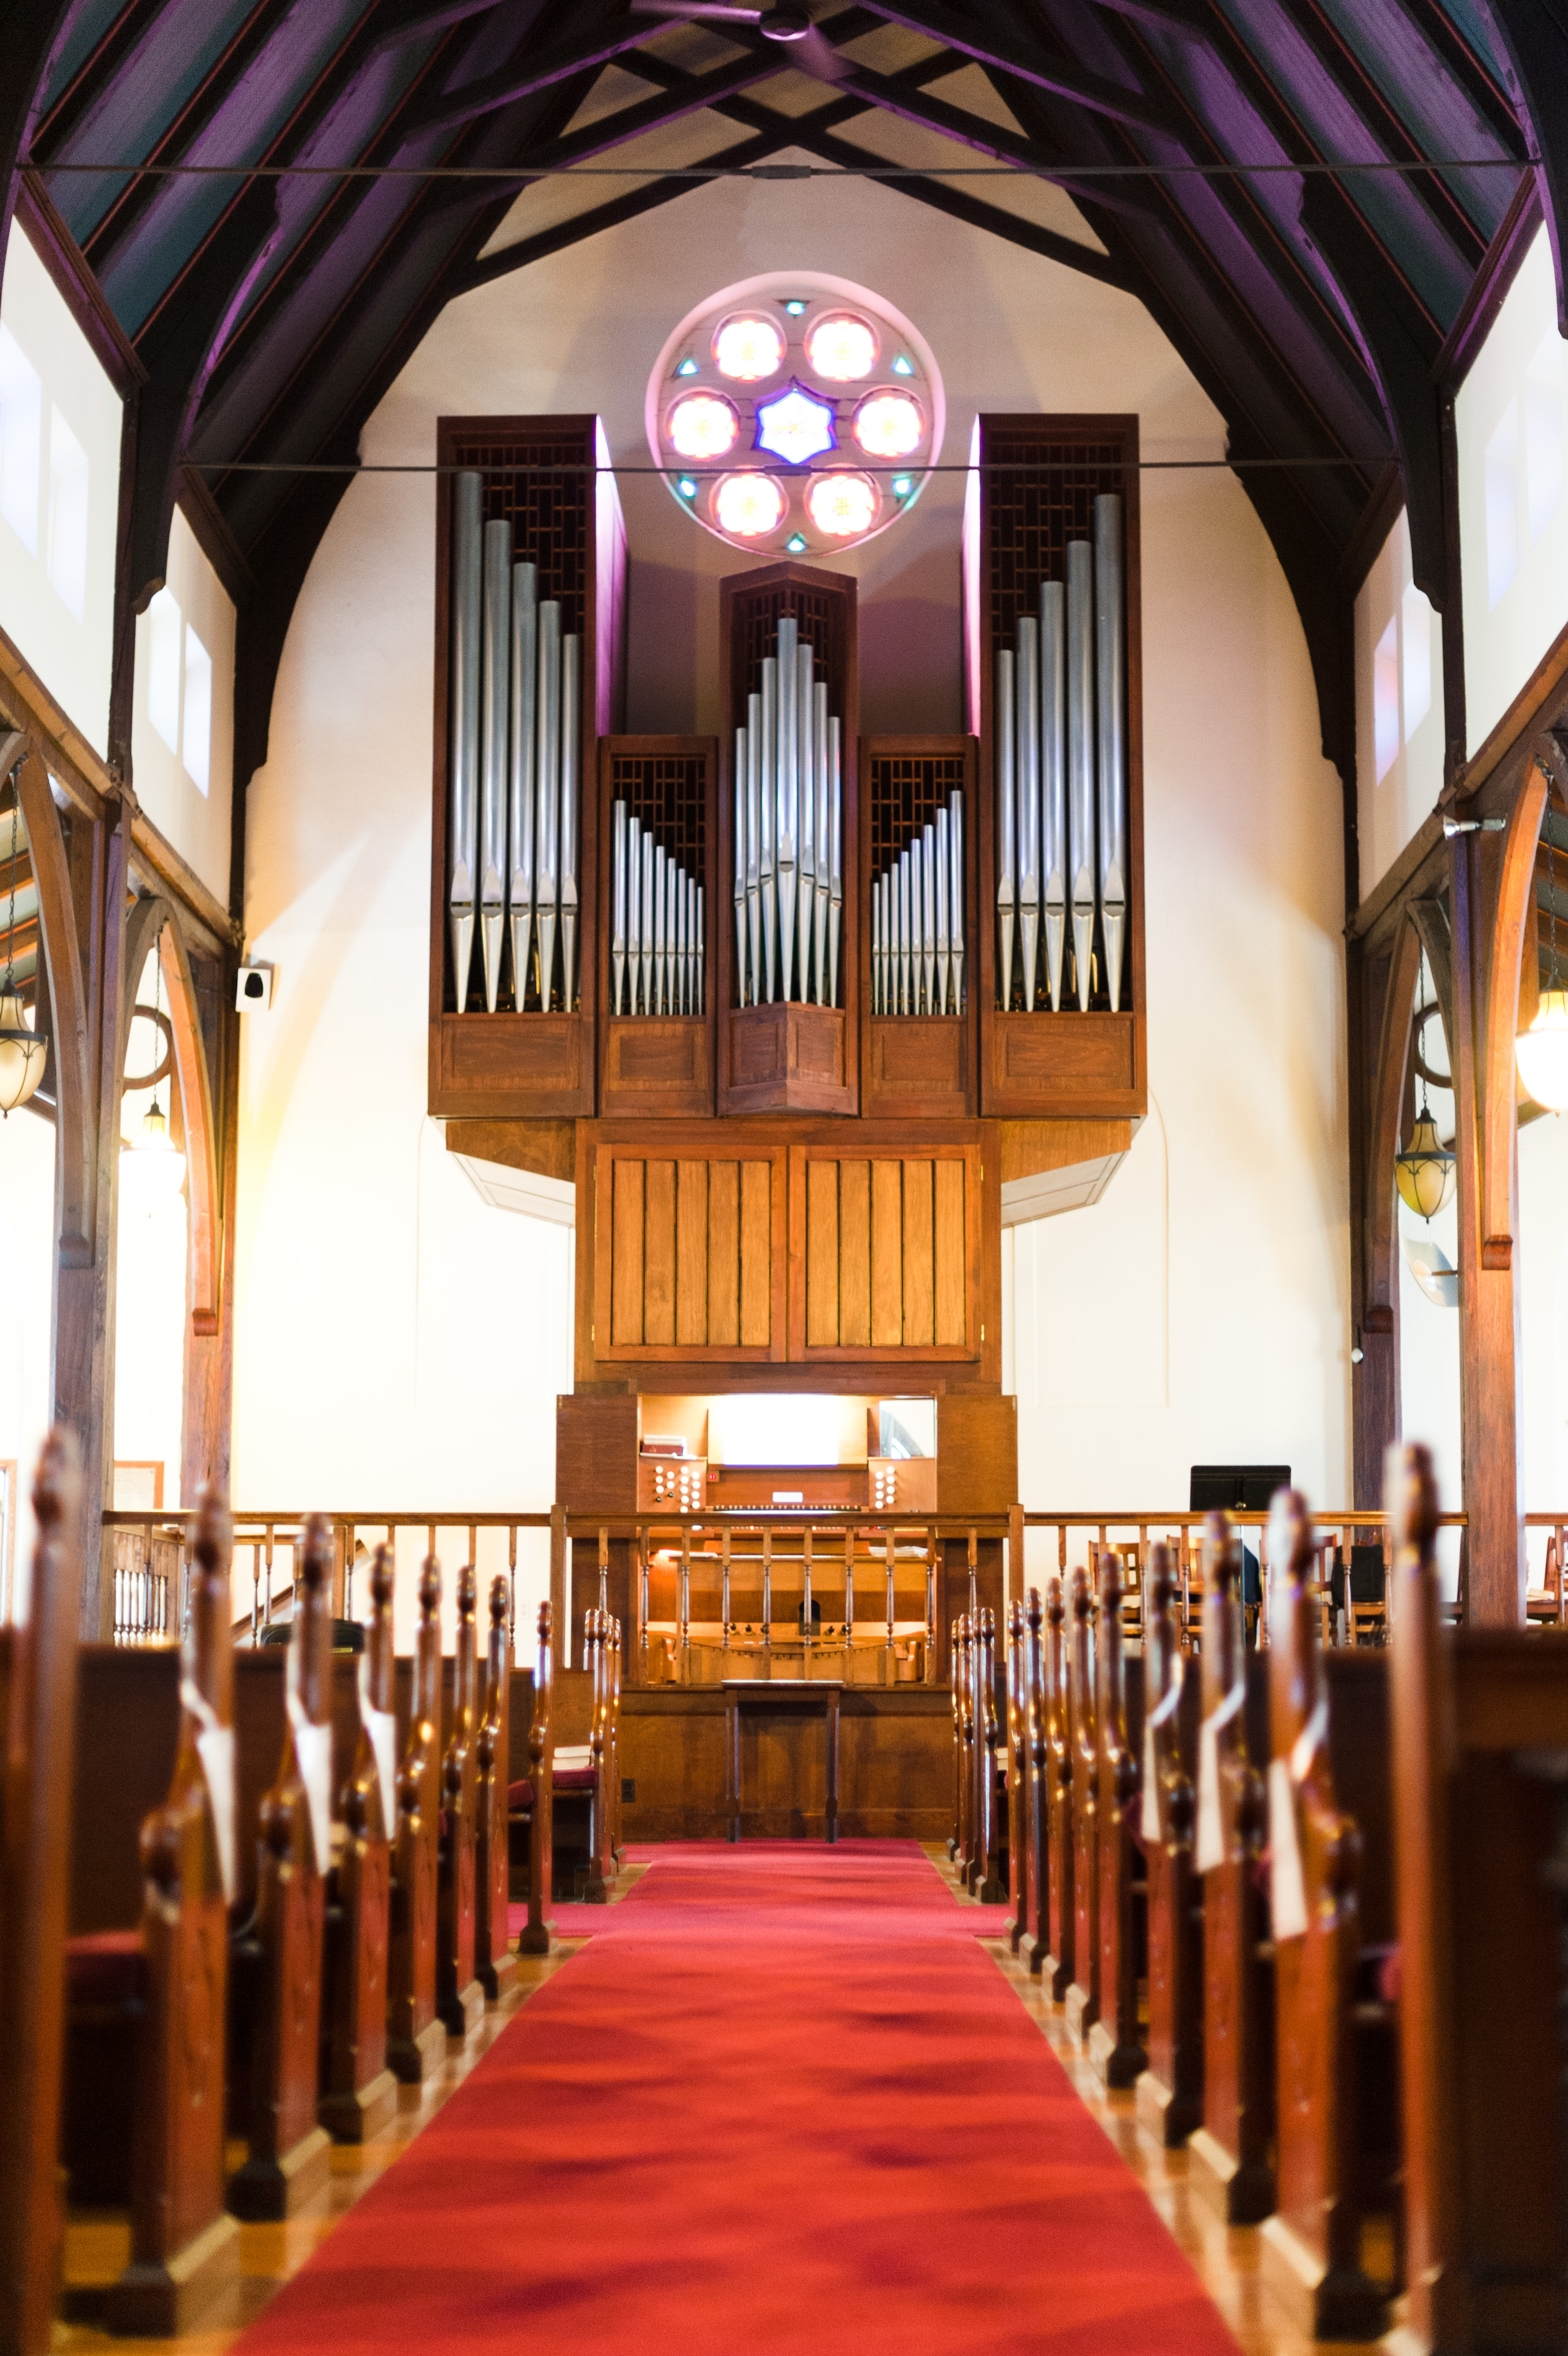 Beckerath Organ at St. Stephen's Church, Millburn, NJ